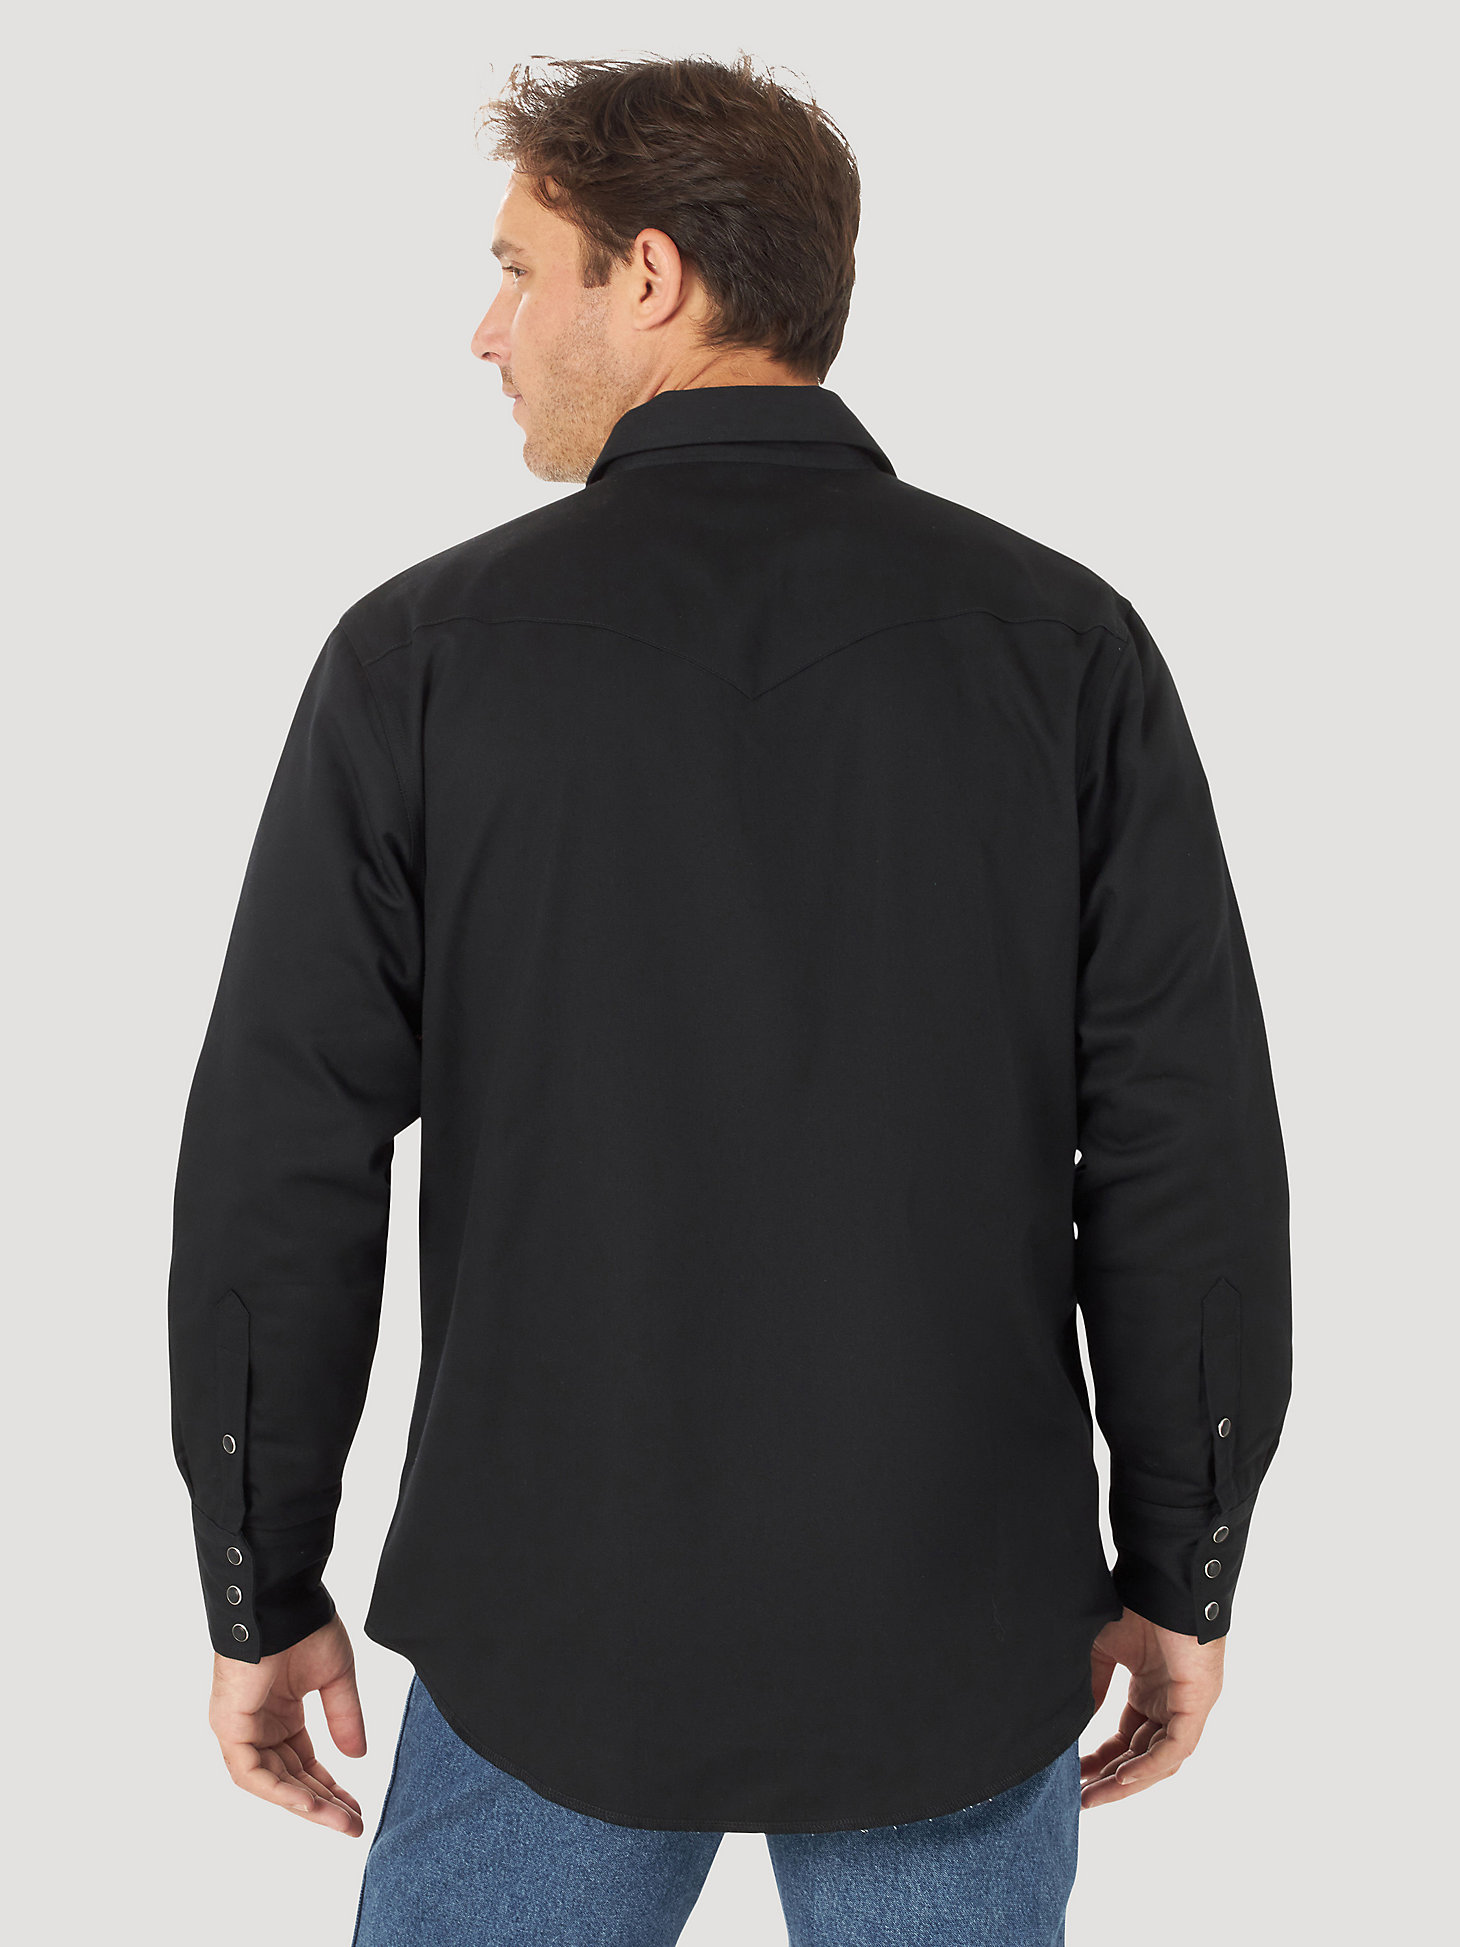 Men's Wrangler® Long Sleeve Flannel Lined Solid Work Shirt in Black/Burgundy alternative view 2